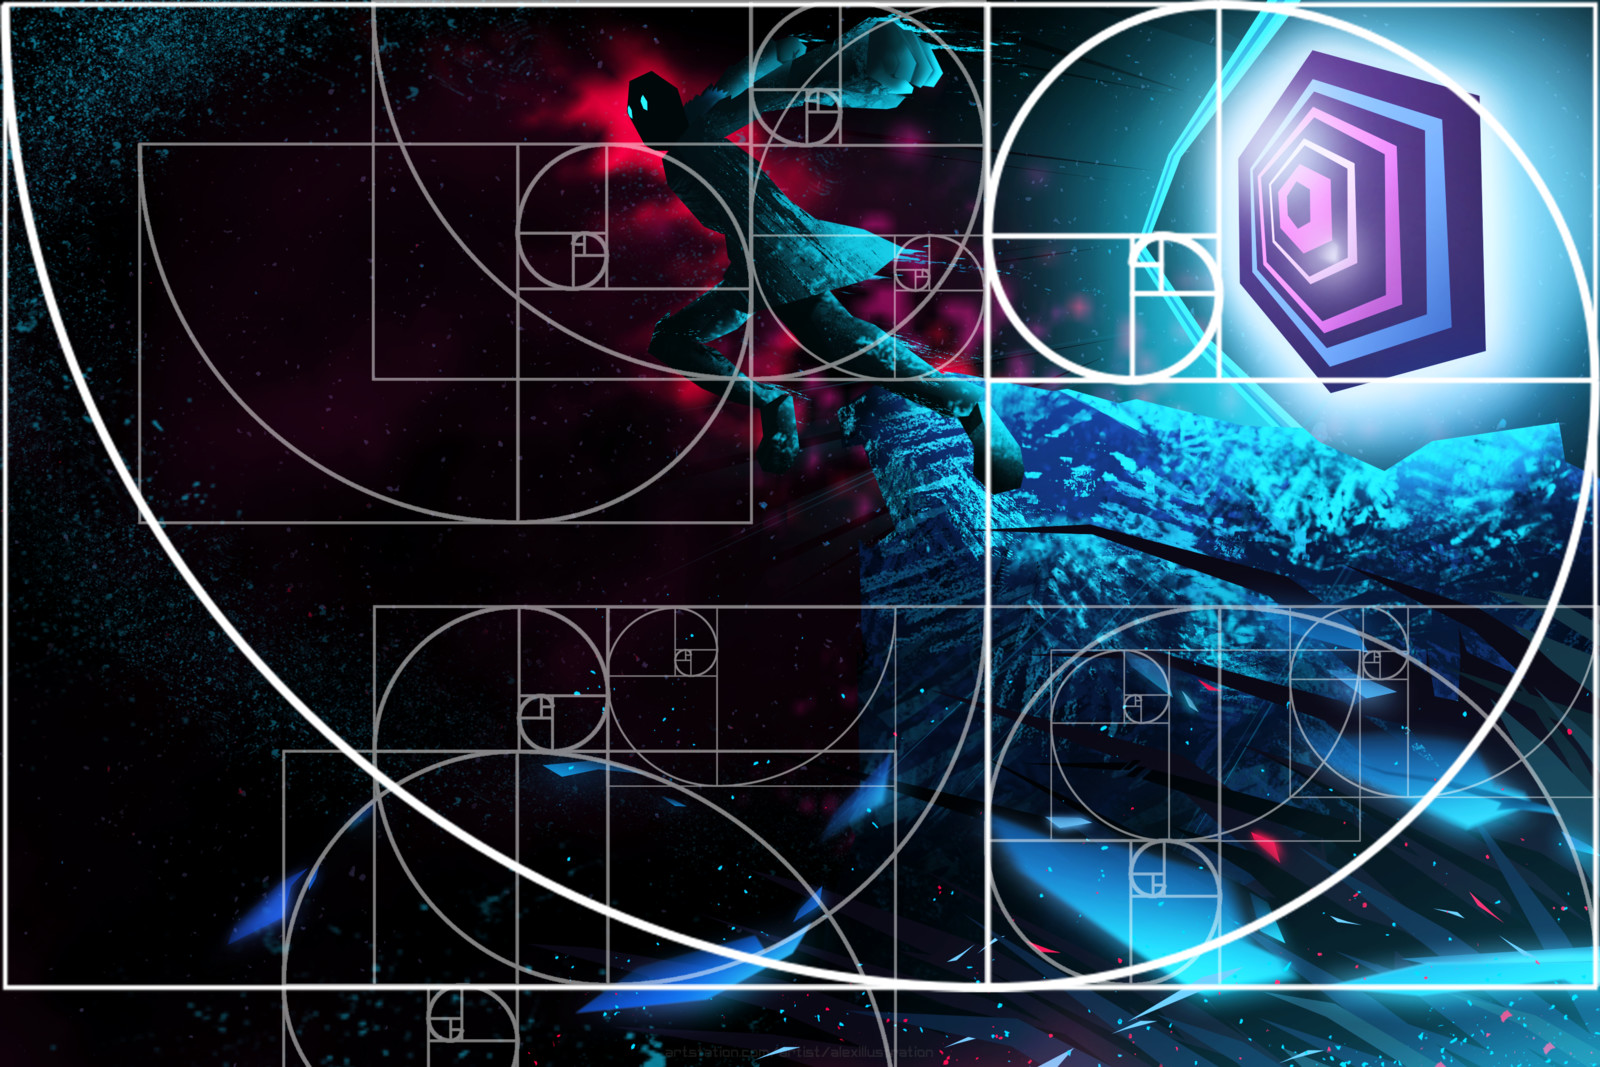 Composition [Fibonacci sequence]